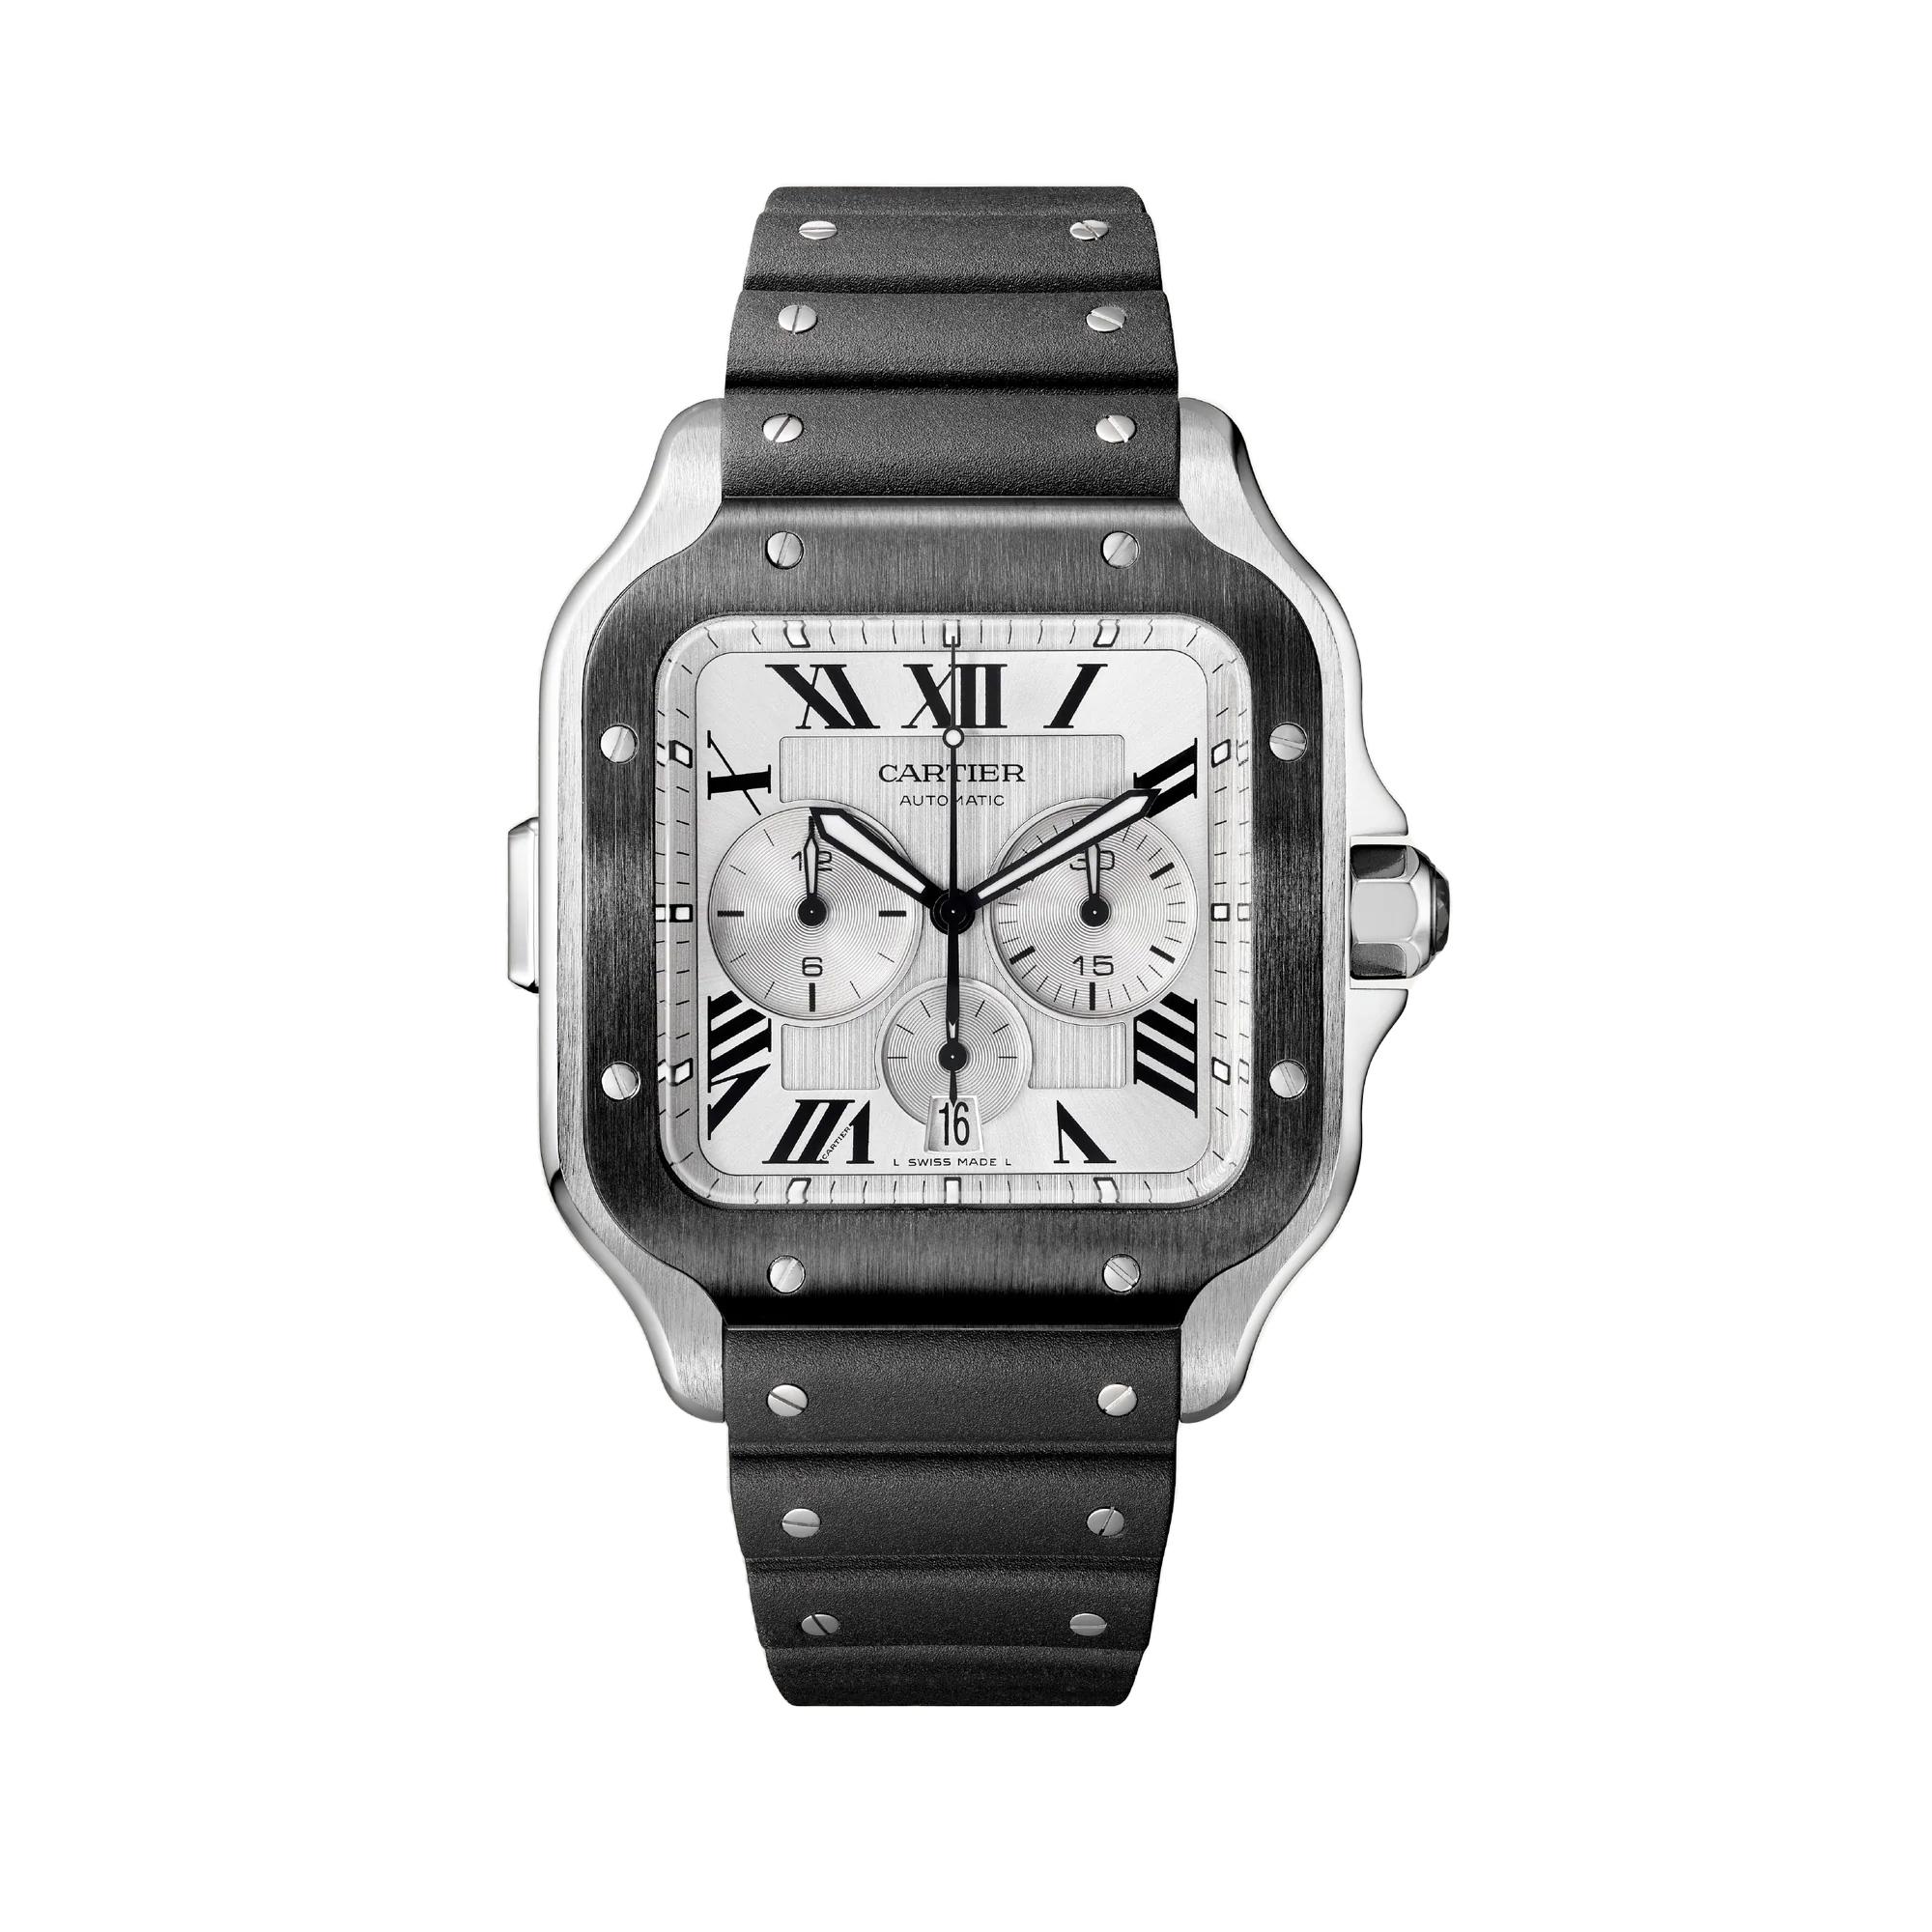 Santos de Cartier Chronograph Watch, size extra large